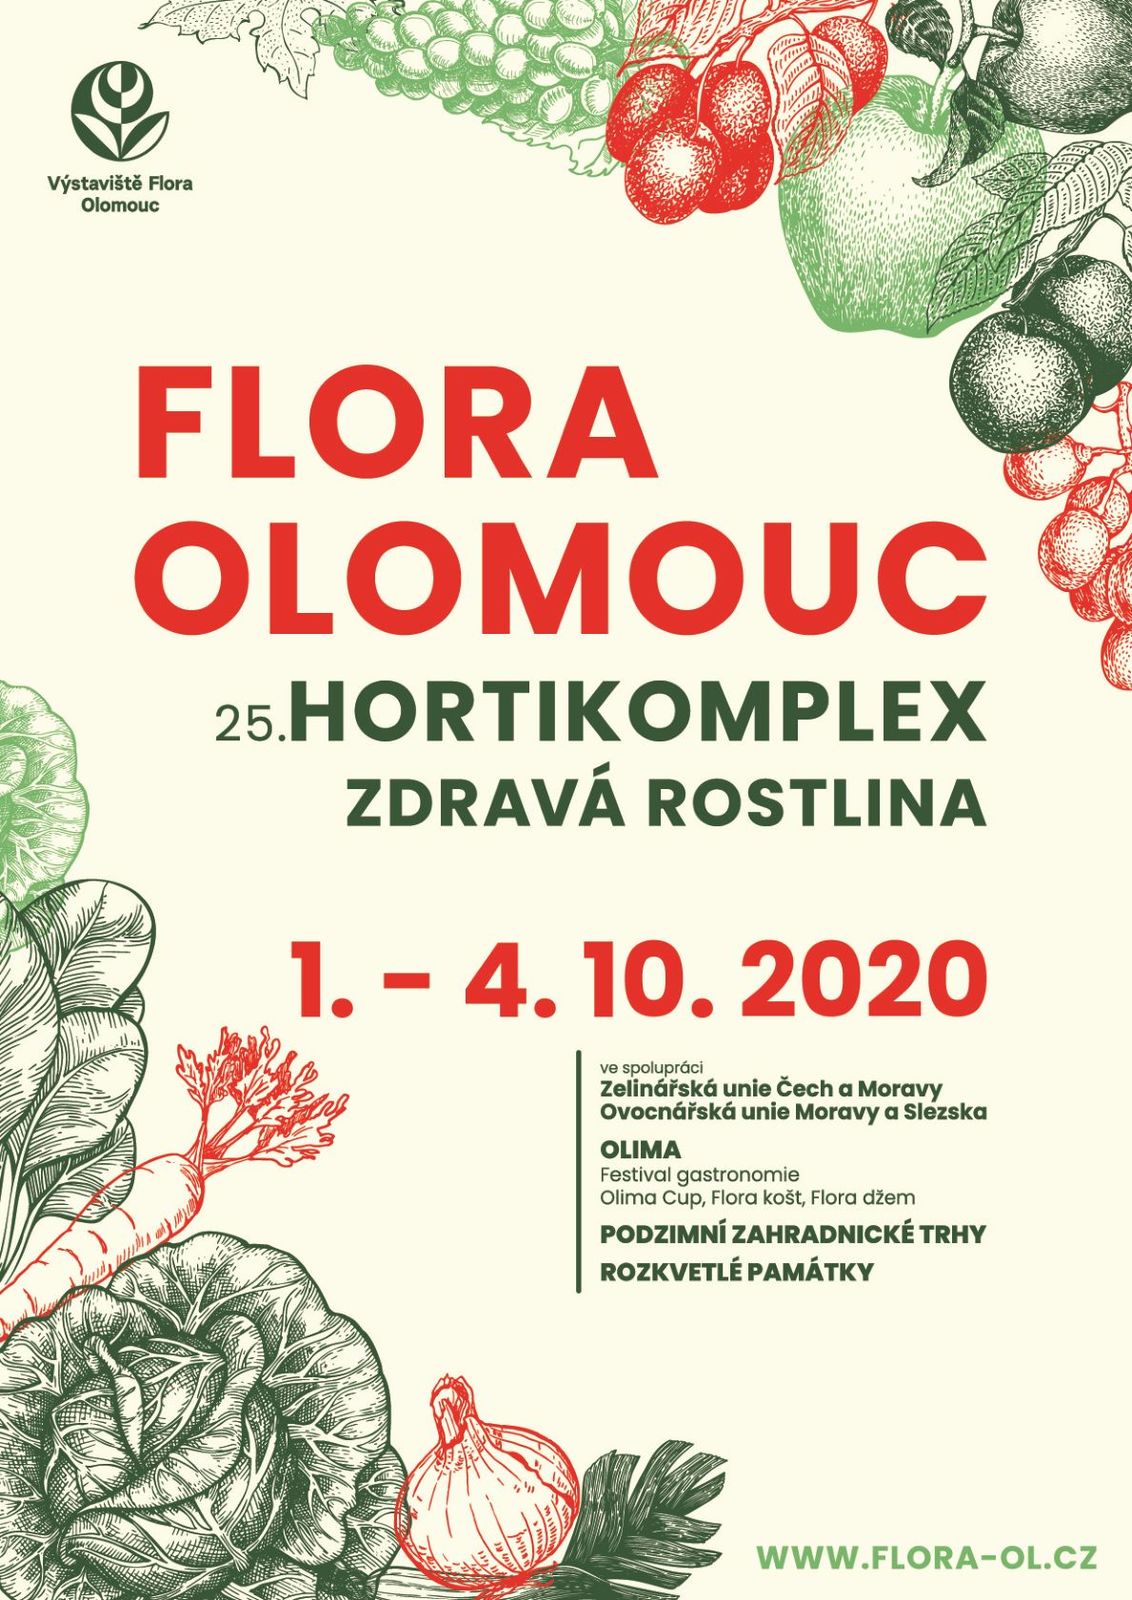 Flora Olomouc.jpg